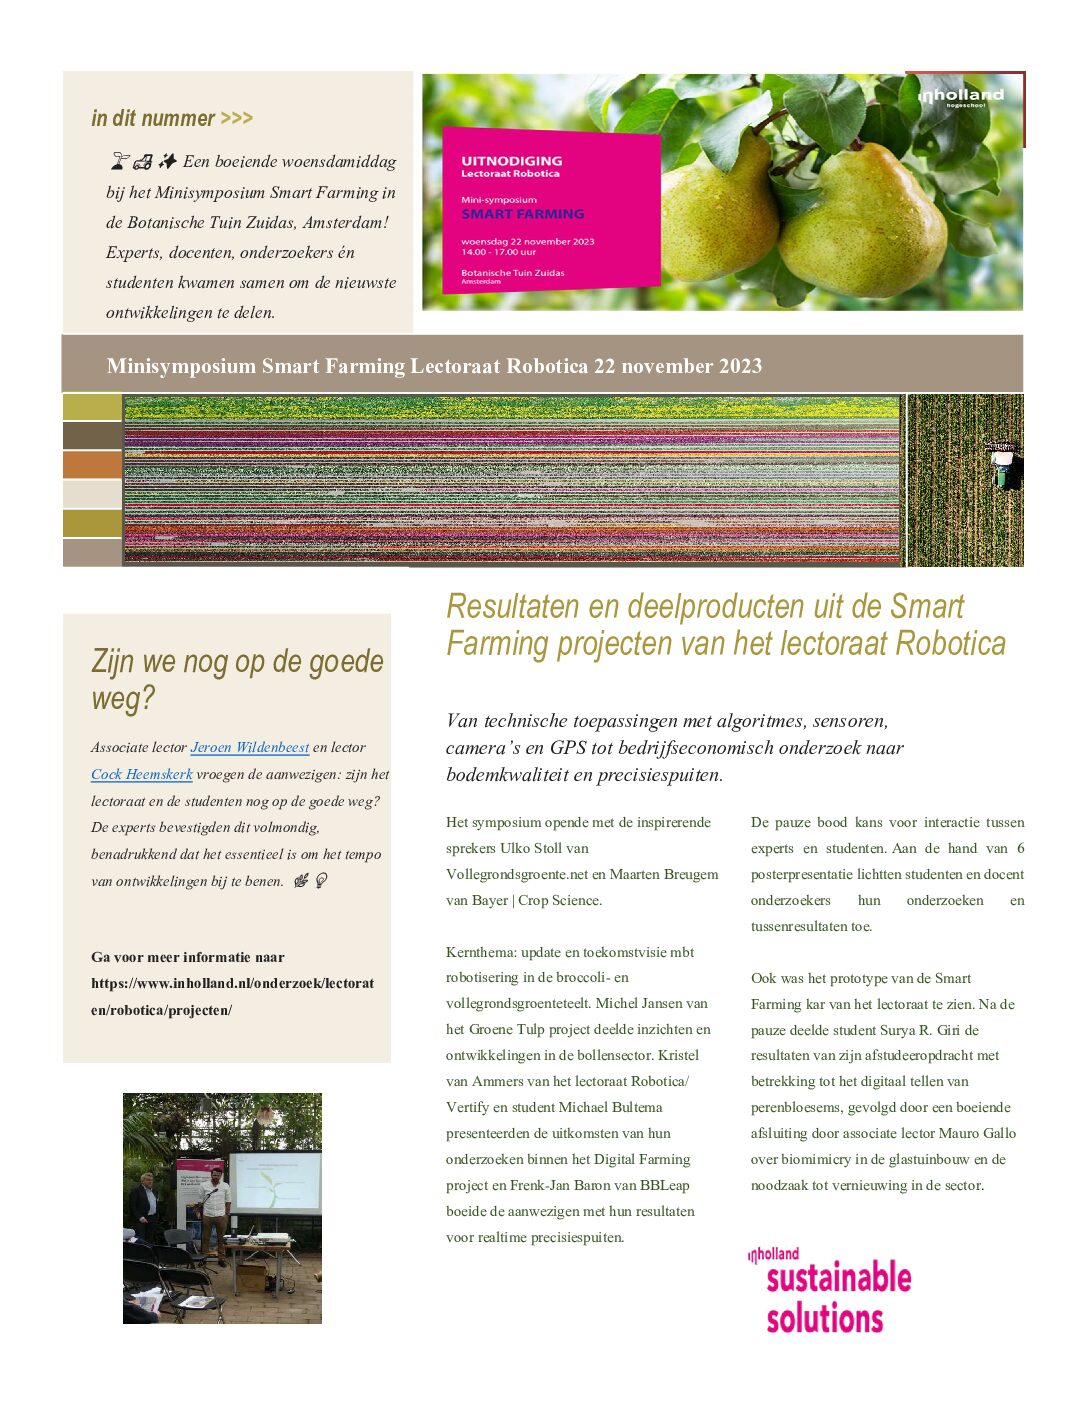 Nieuwsbrief Smart Farming Minisymposium LR 22 november 2023